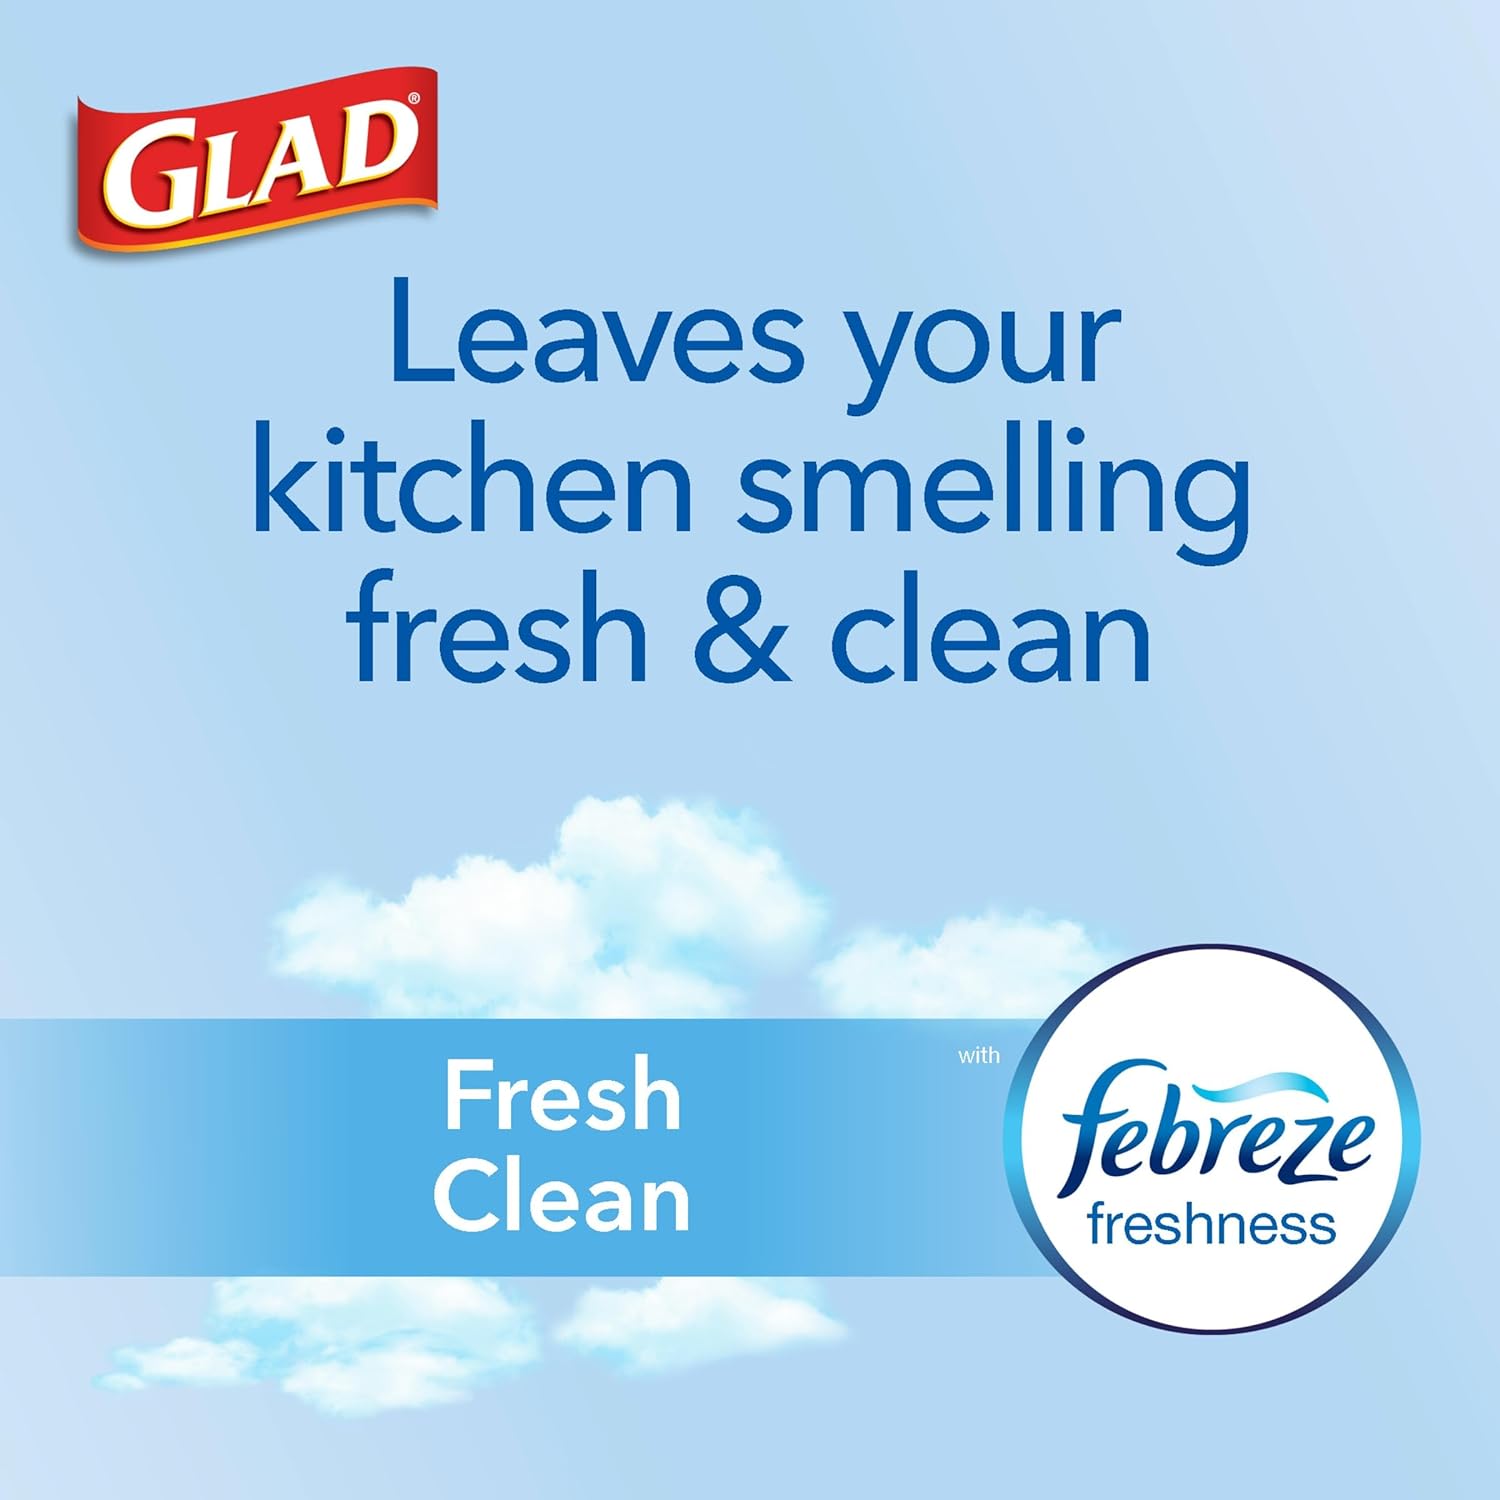 Glad ForceFlex Tall Kitchen Drawstring Trash Bags, 13 Gal, Fresh Clean Scent with Febreze, 110 Ct